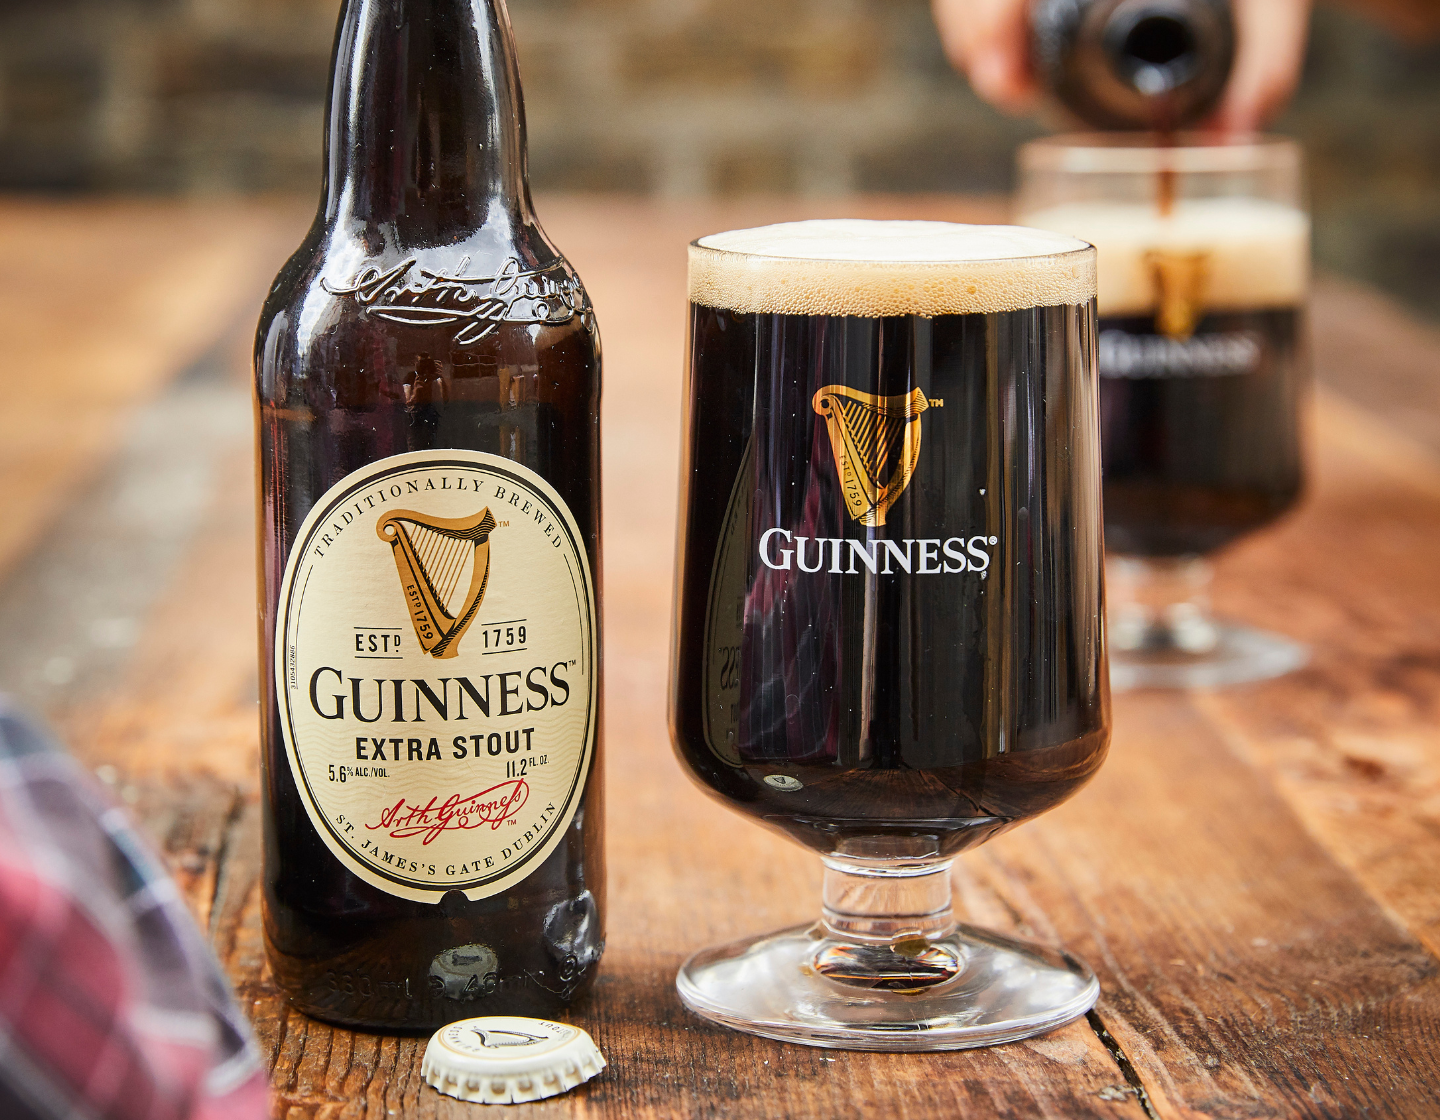 Botella de Guinness Extra Stout sobre la mesa junto a vaso de pinta lleno de Guinness